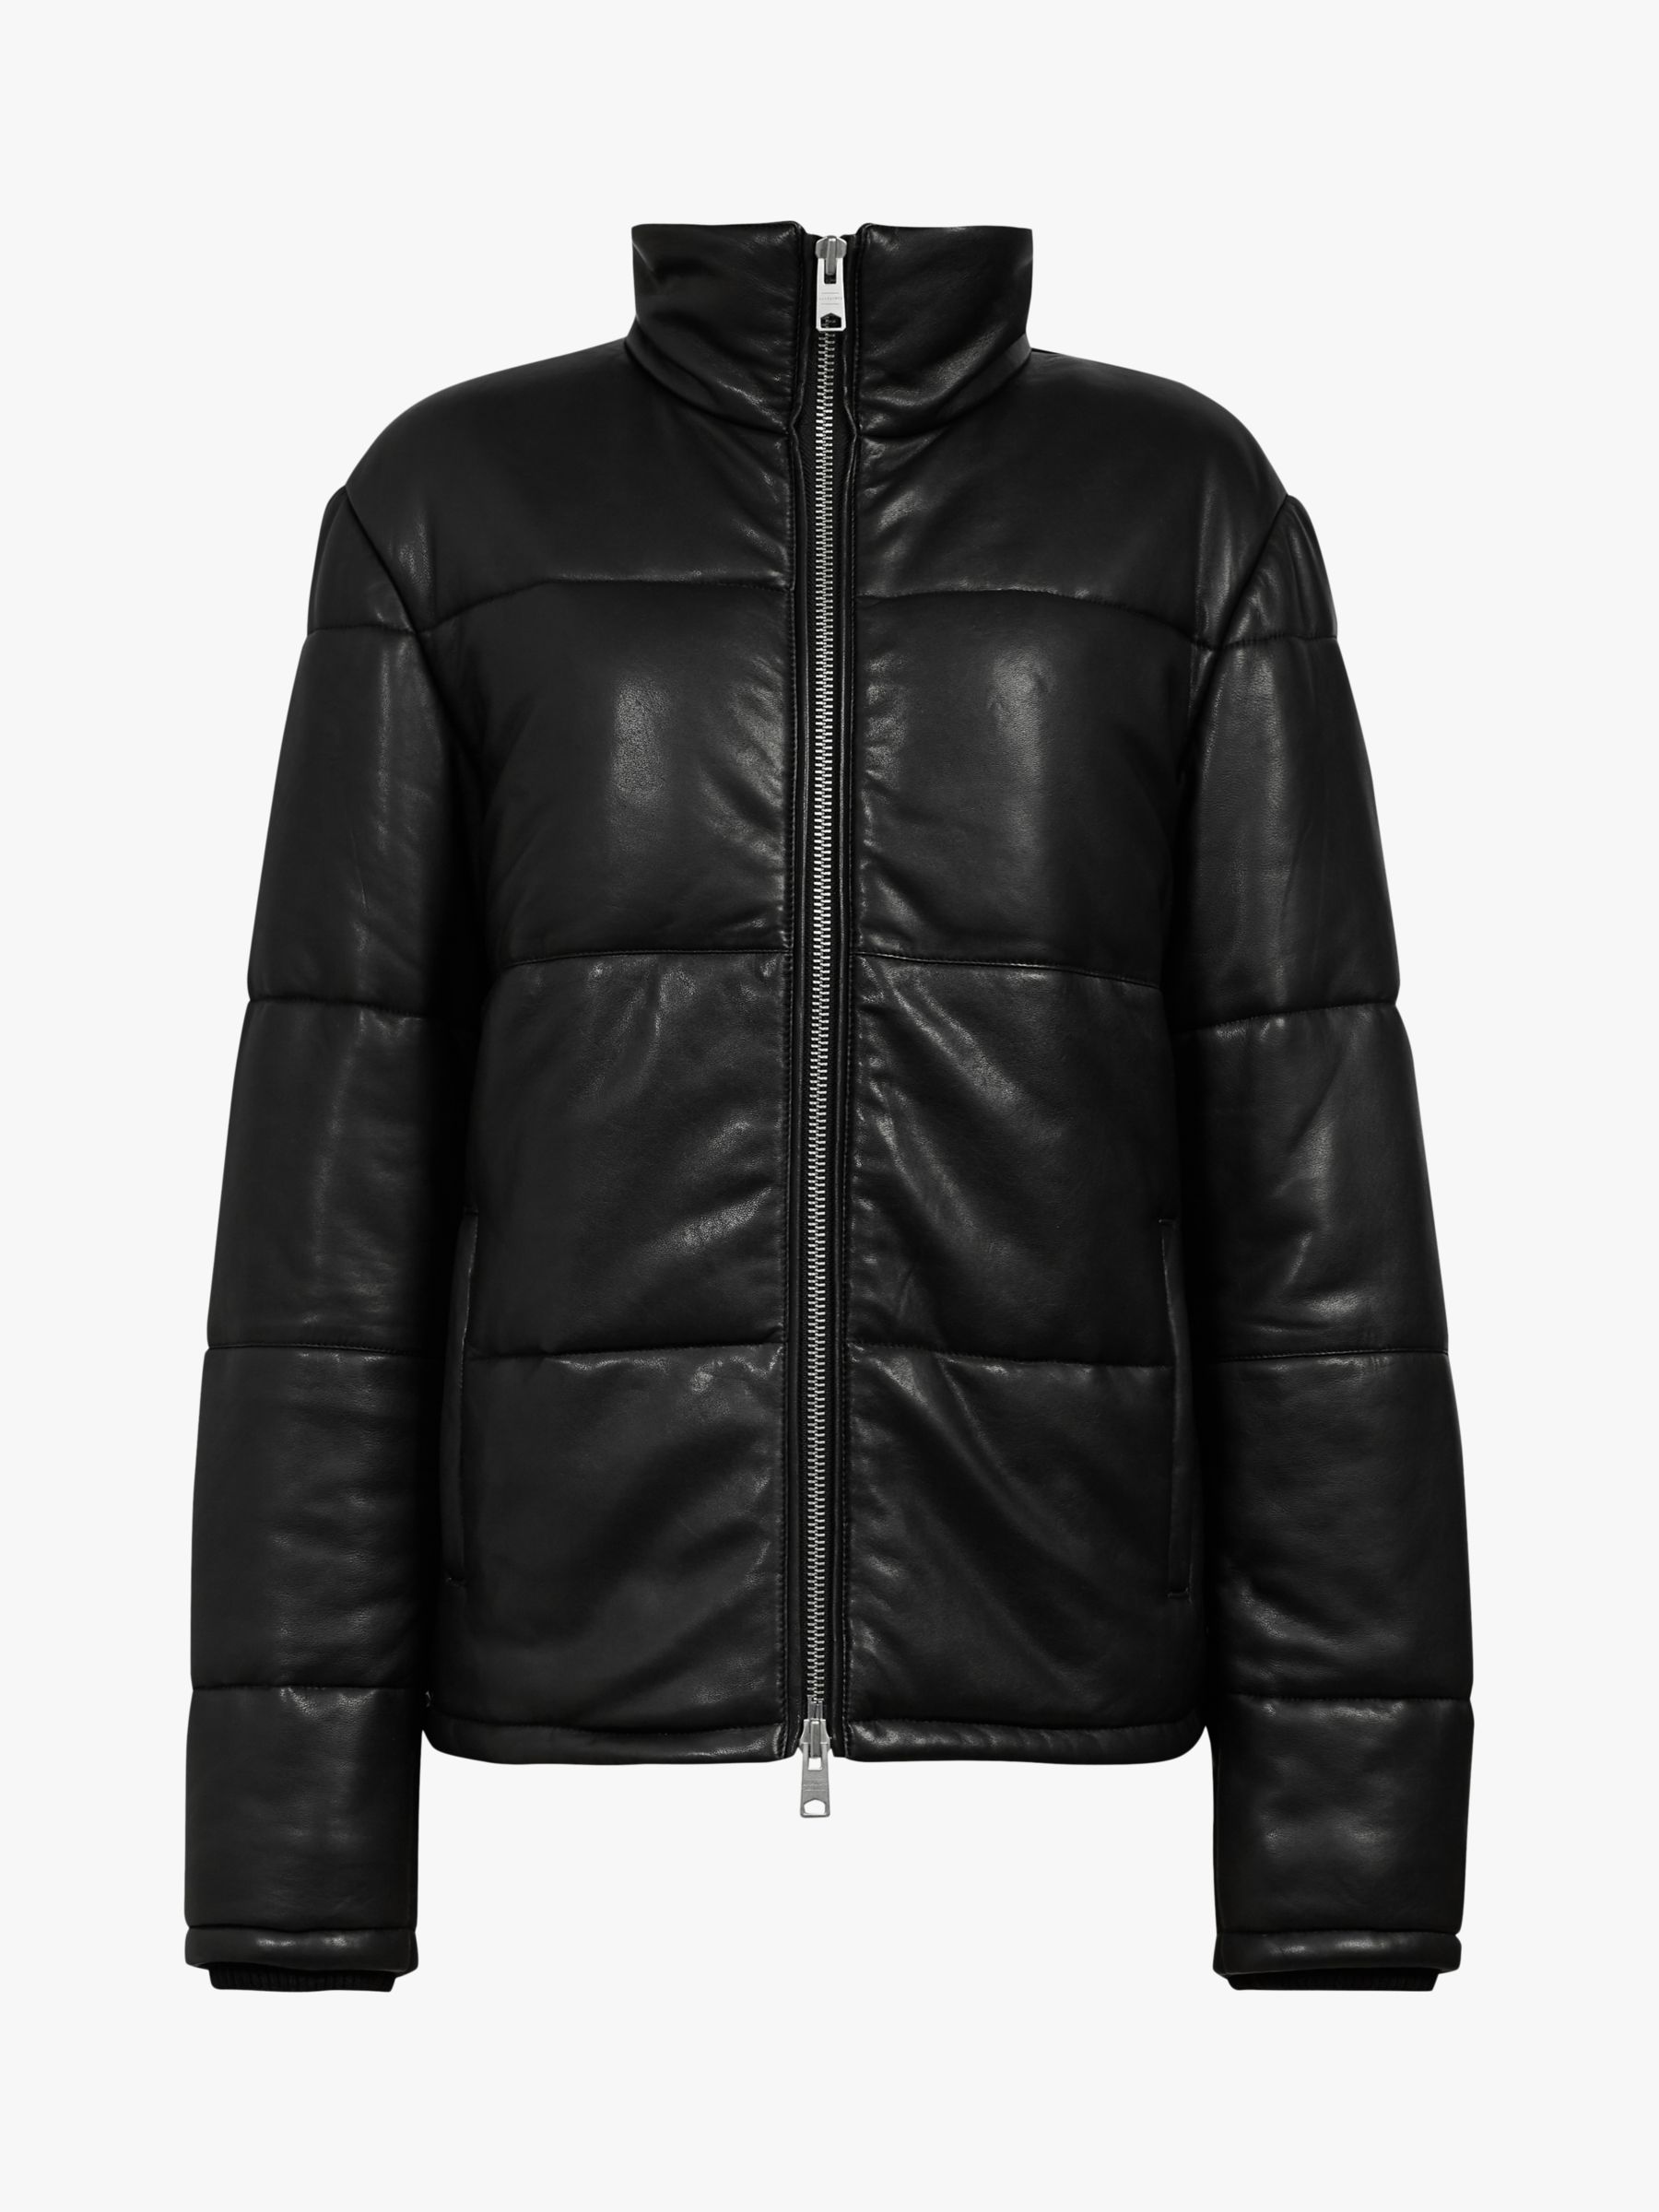 AllSaints Coronet Leather Puffer Jacket, Black at John Lewis & Partners